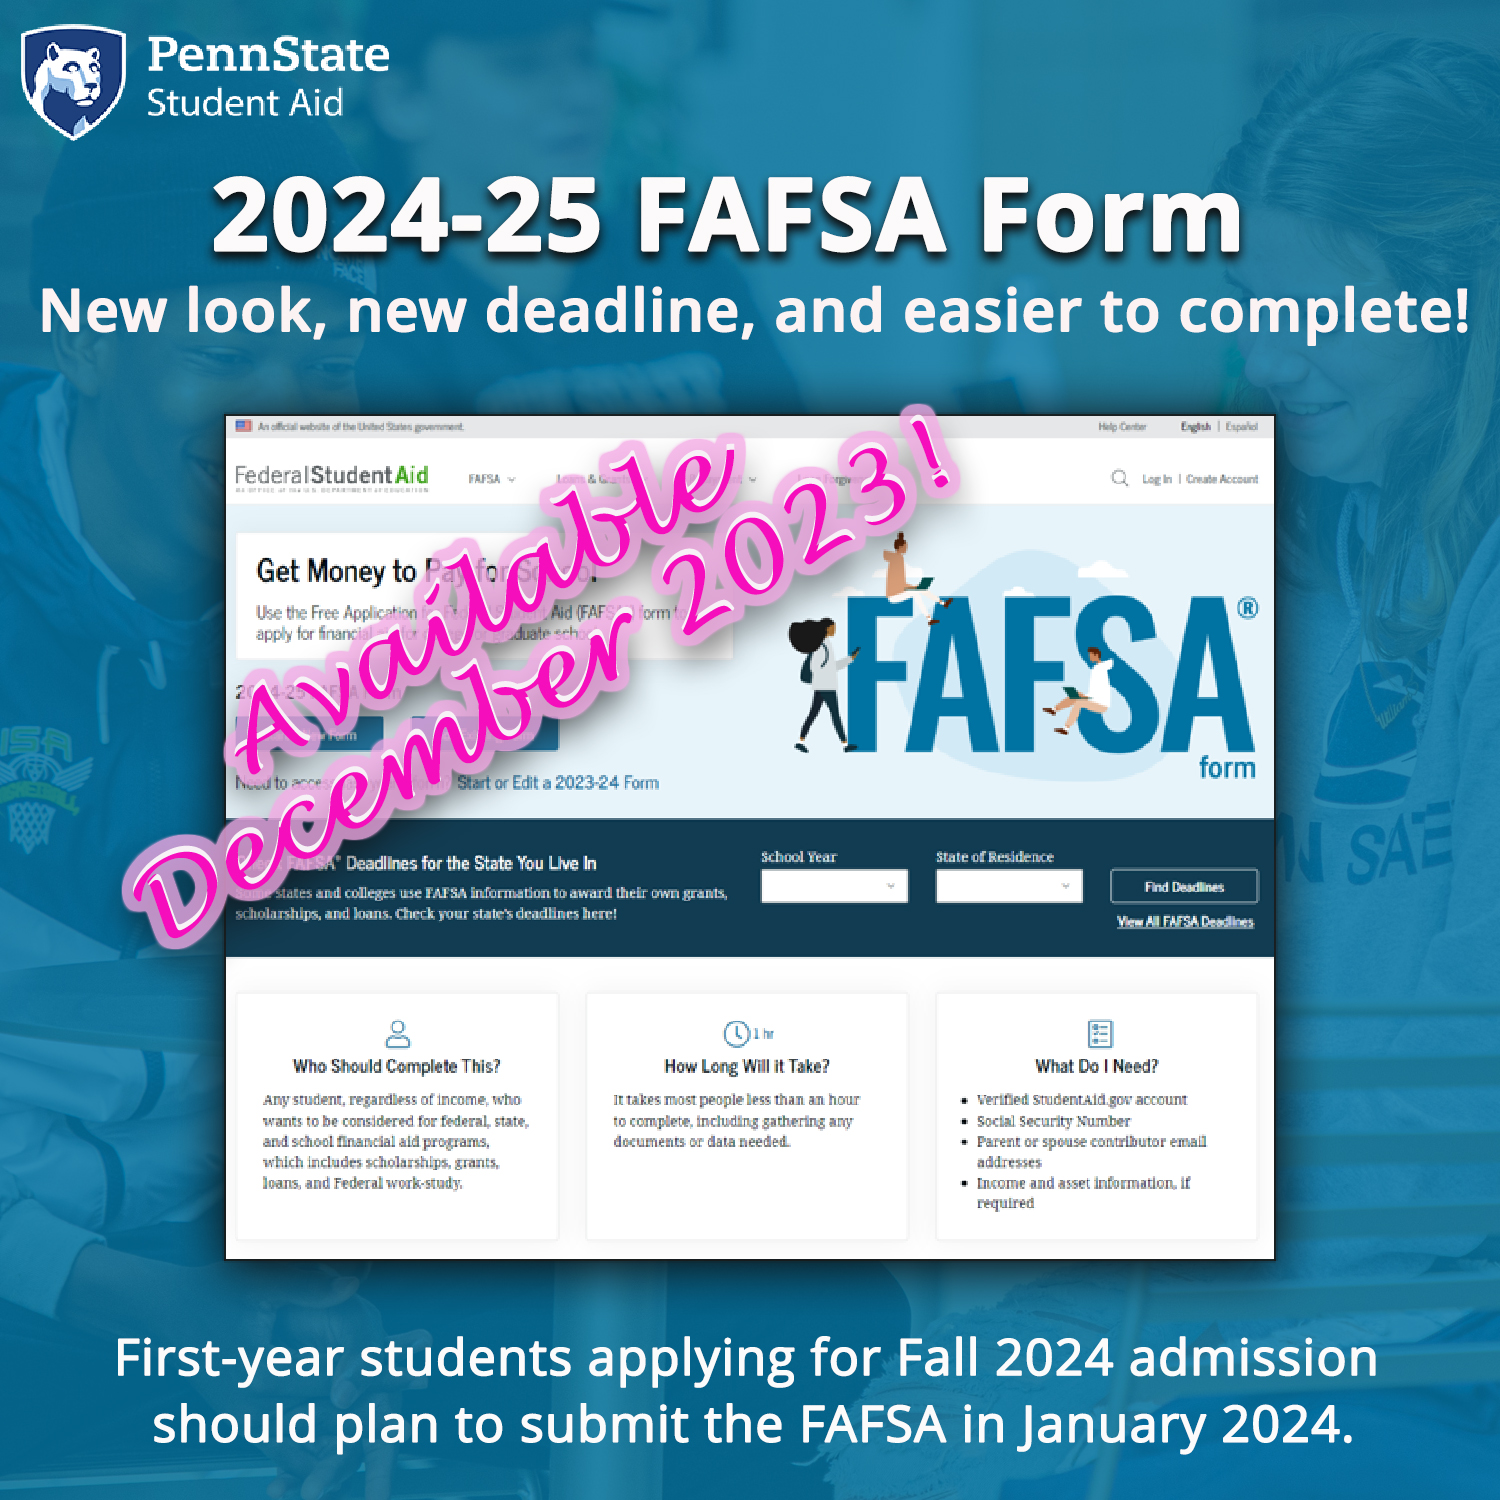 fafsa-deadline-2024-25-school-year-fleur-jessika